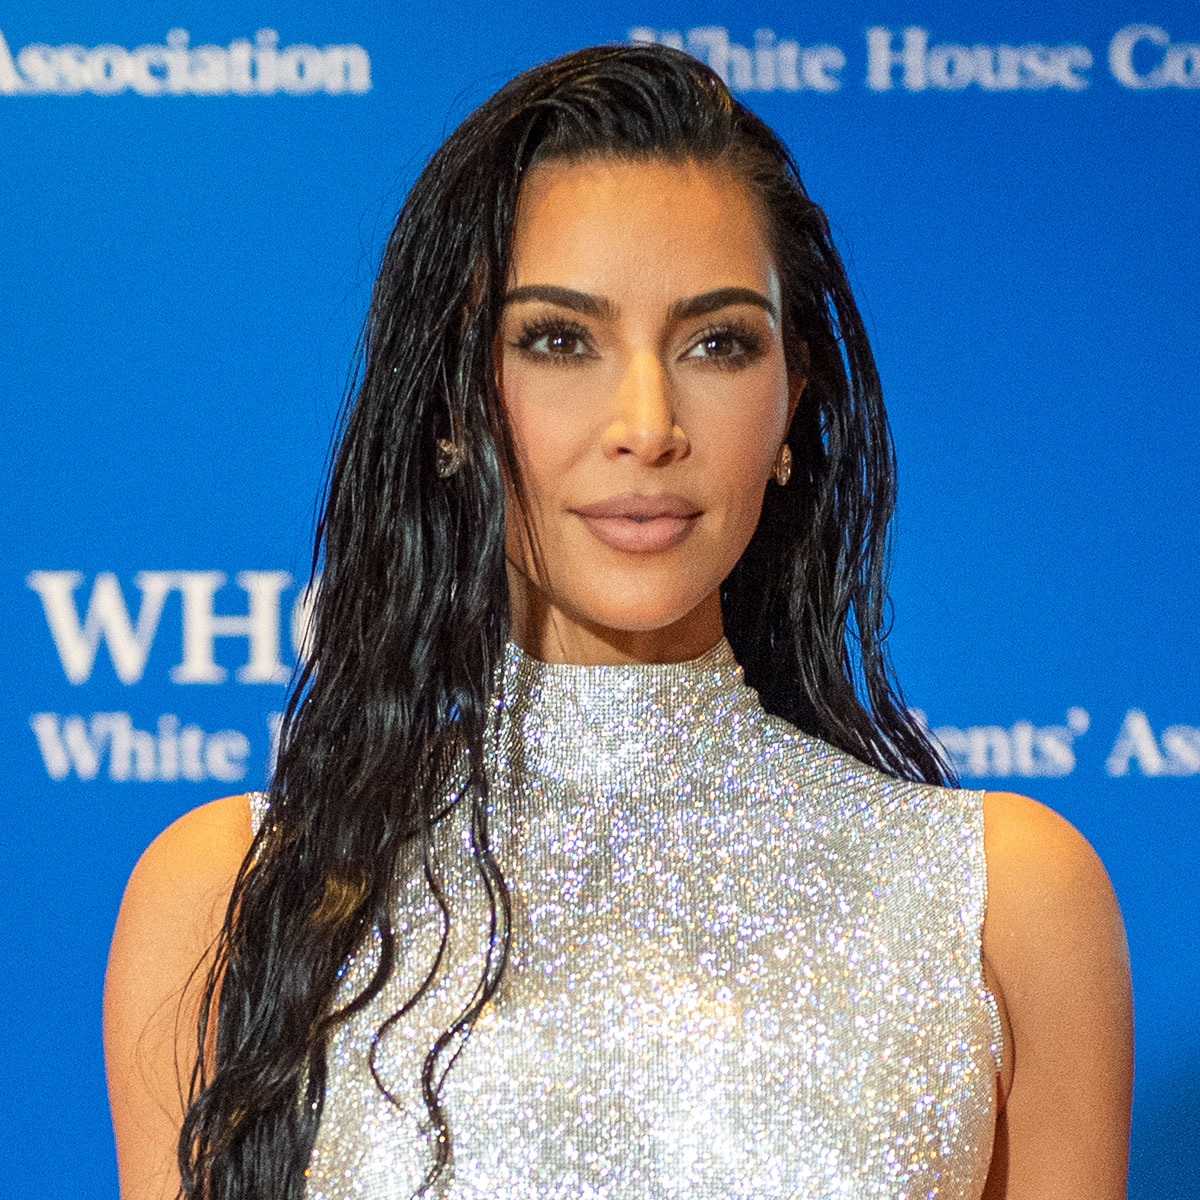 Kim Kardashian debuts her new sleek shoulder-length hair cut as